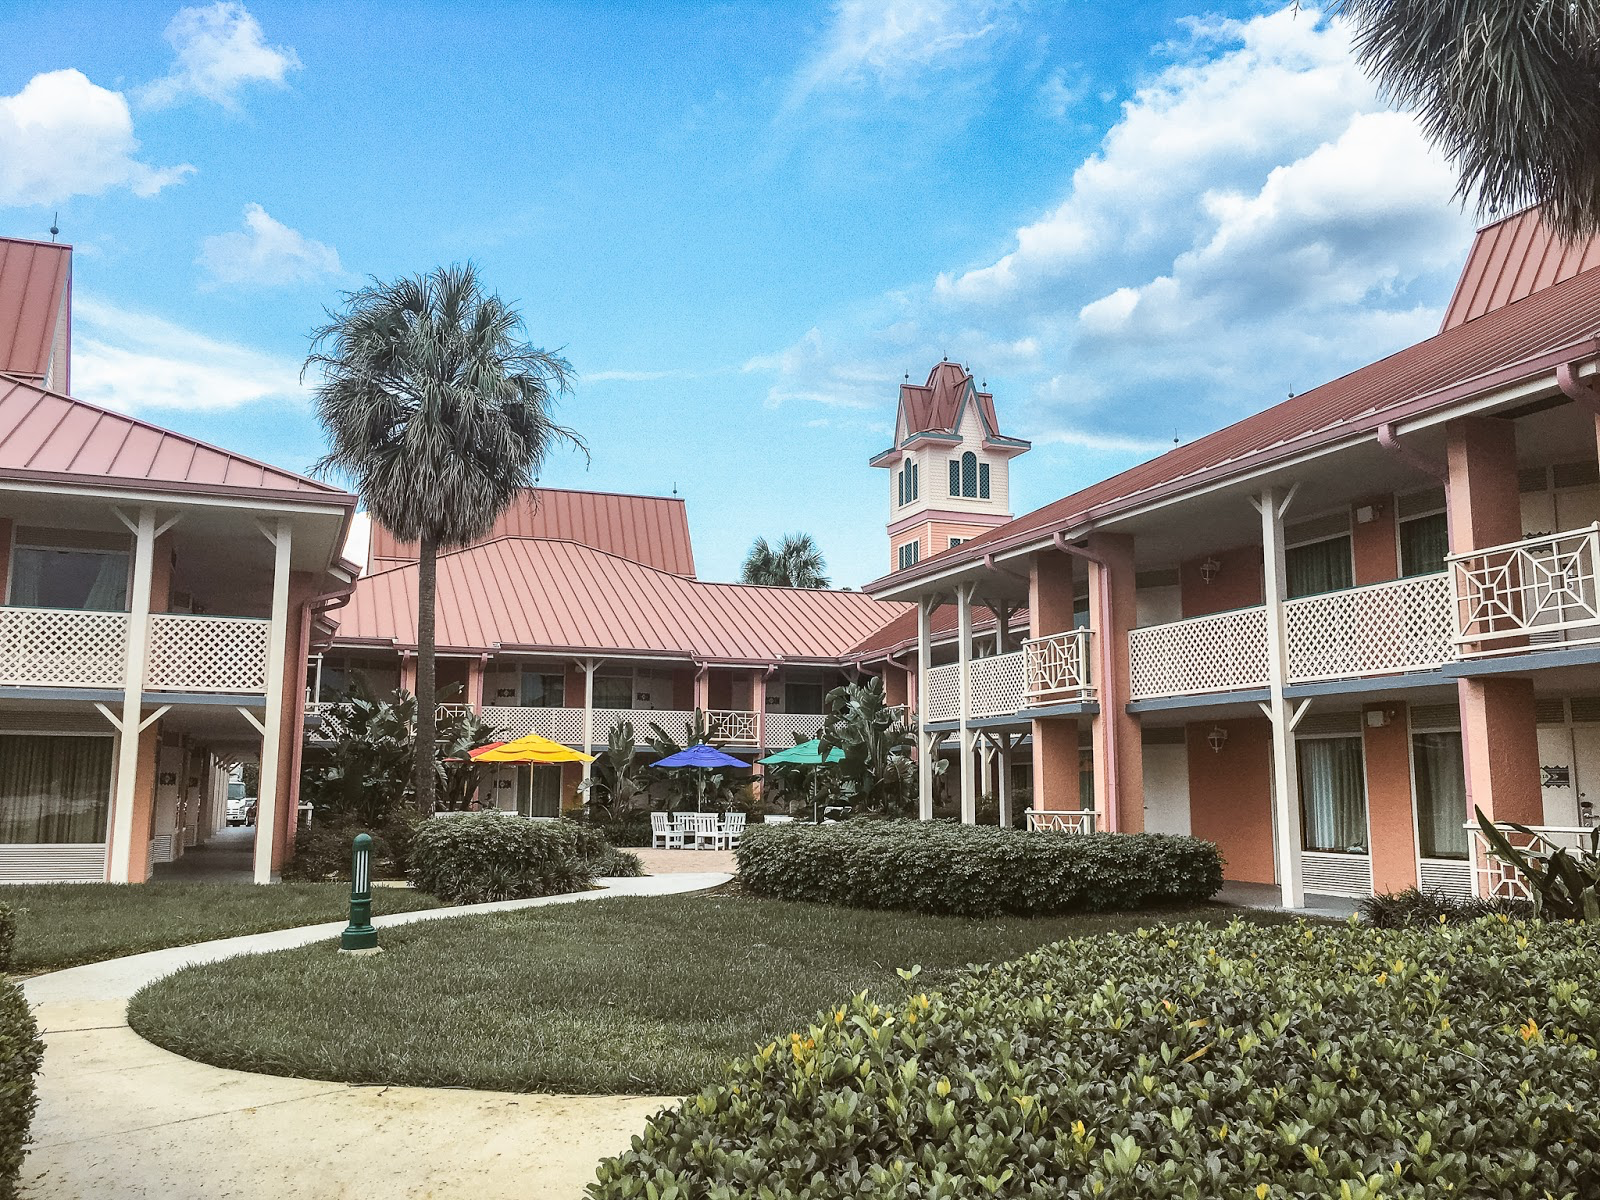 Disney Moderate Resort Comparison- Caribbean Beach Resort